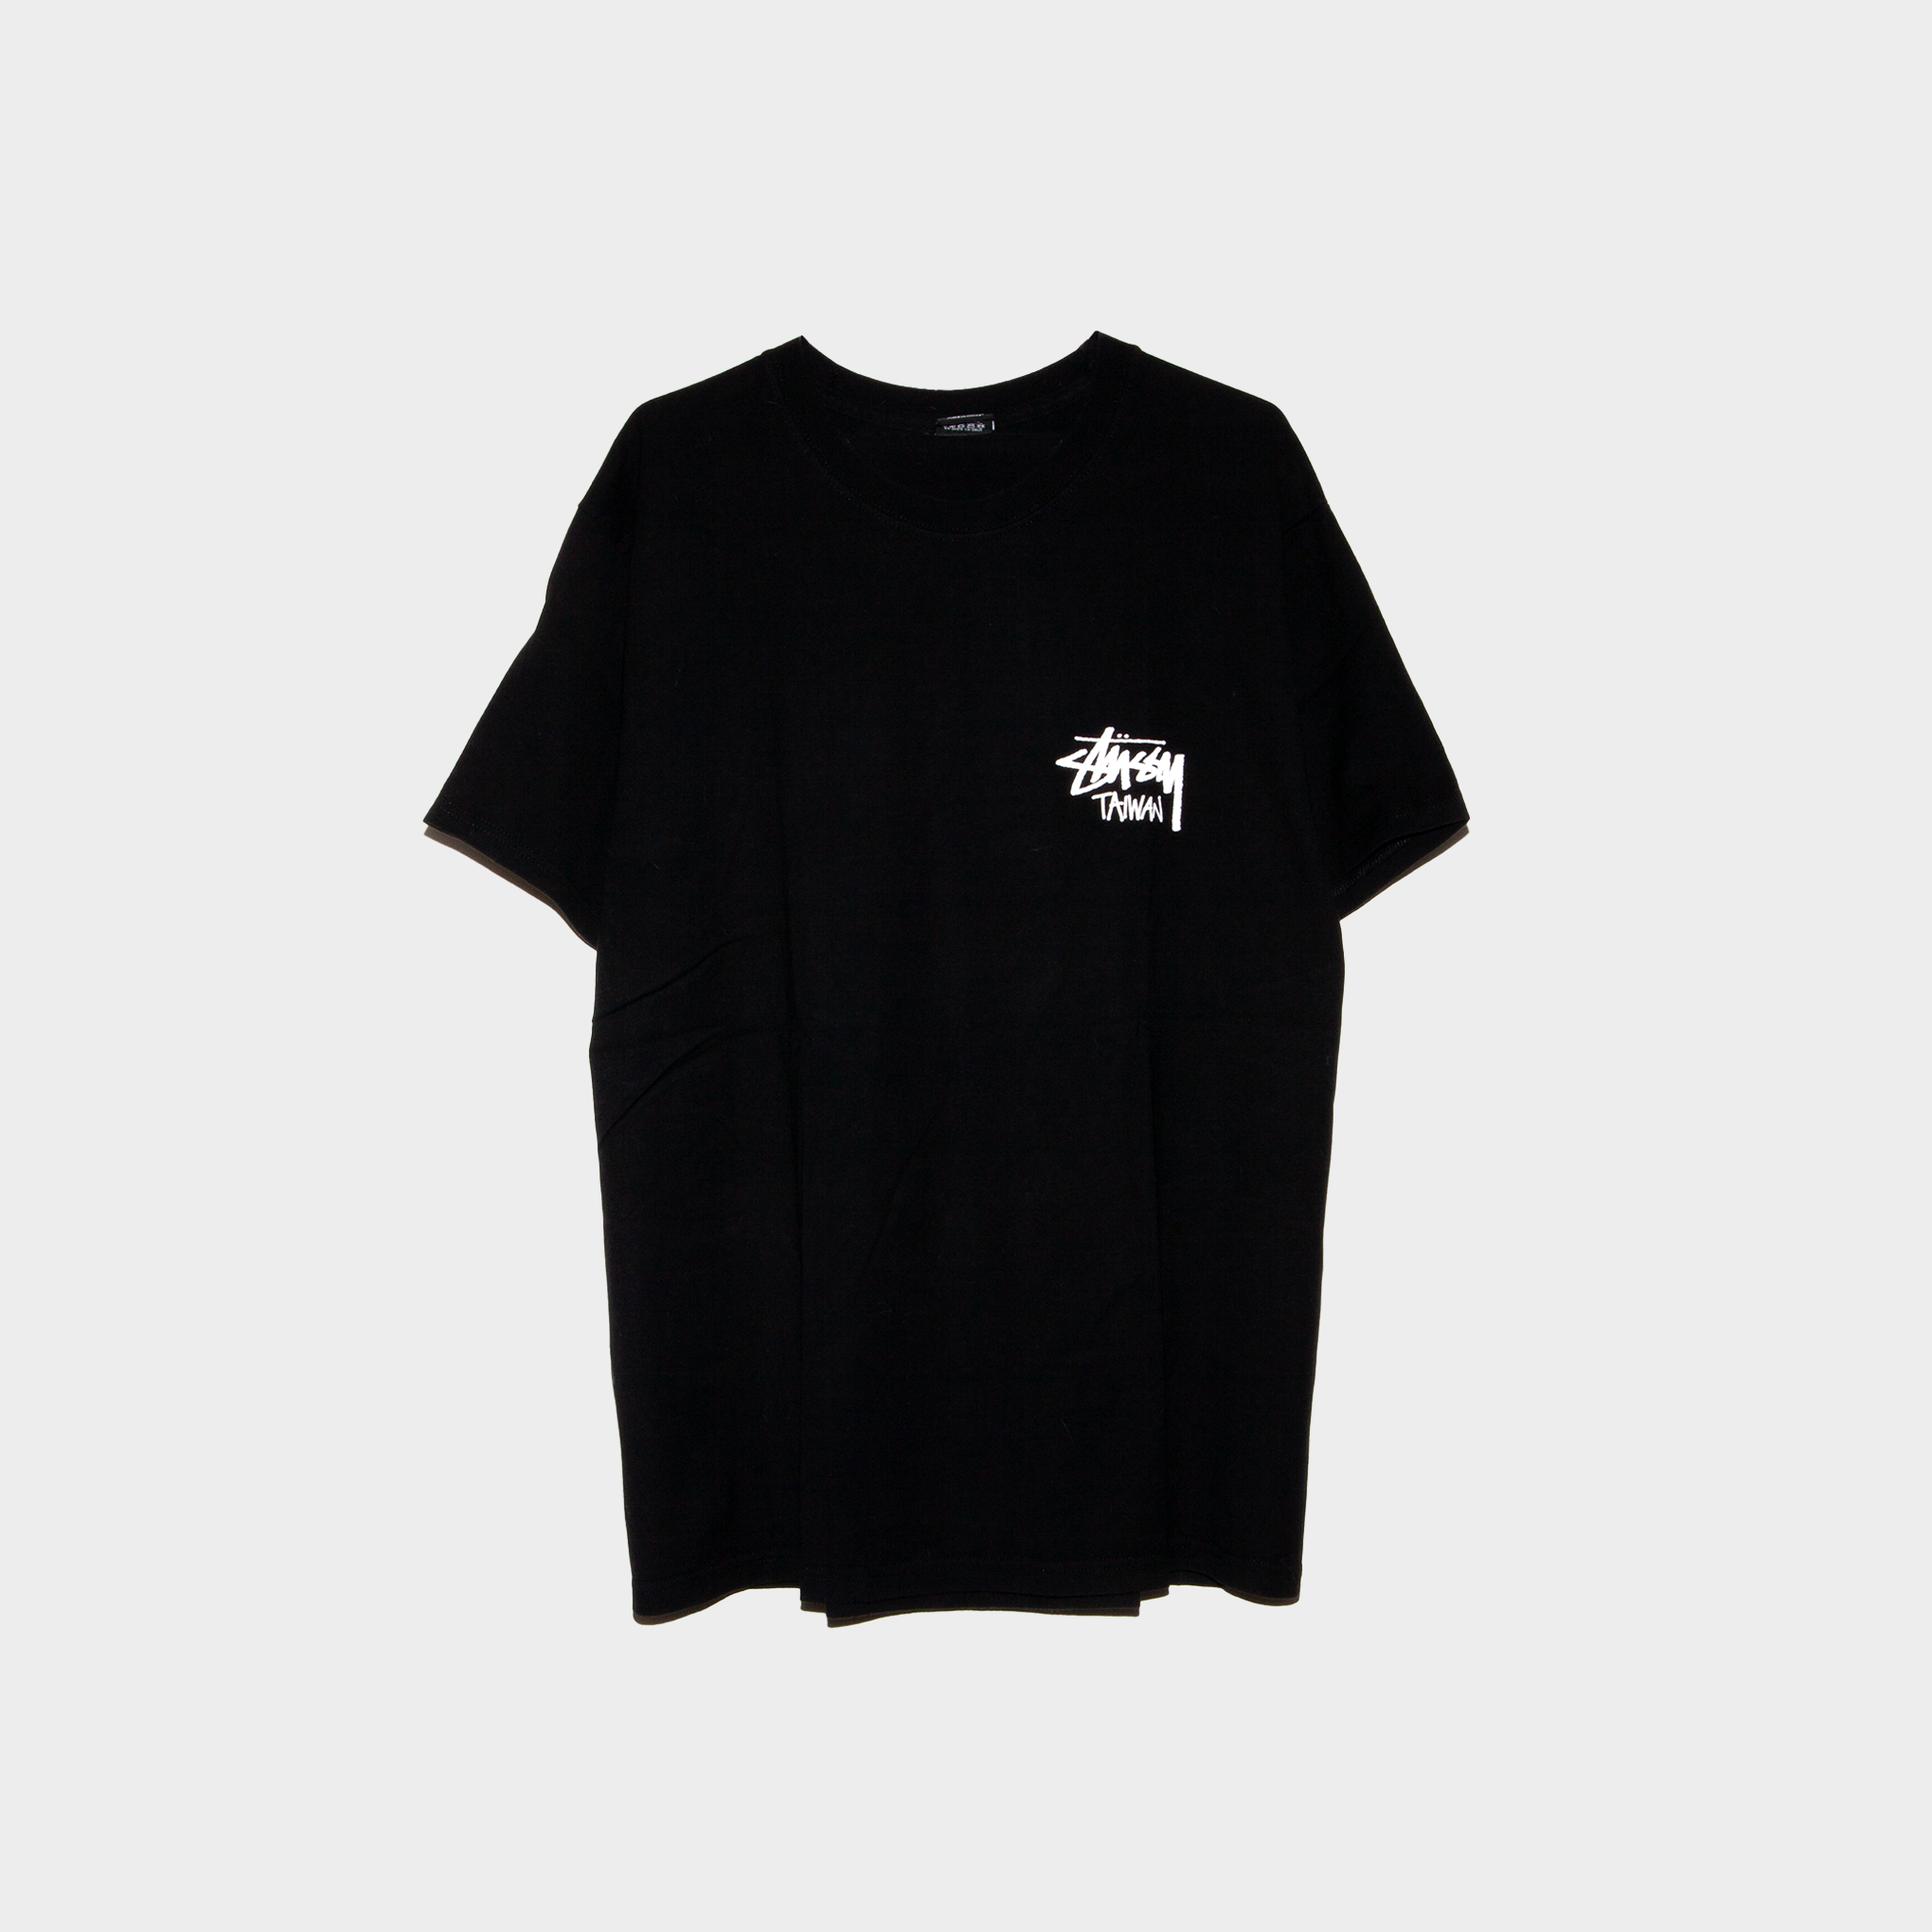 Stussy Stock Taiwan T-shirt Black [used]